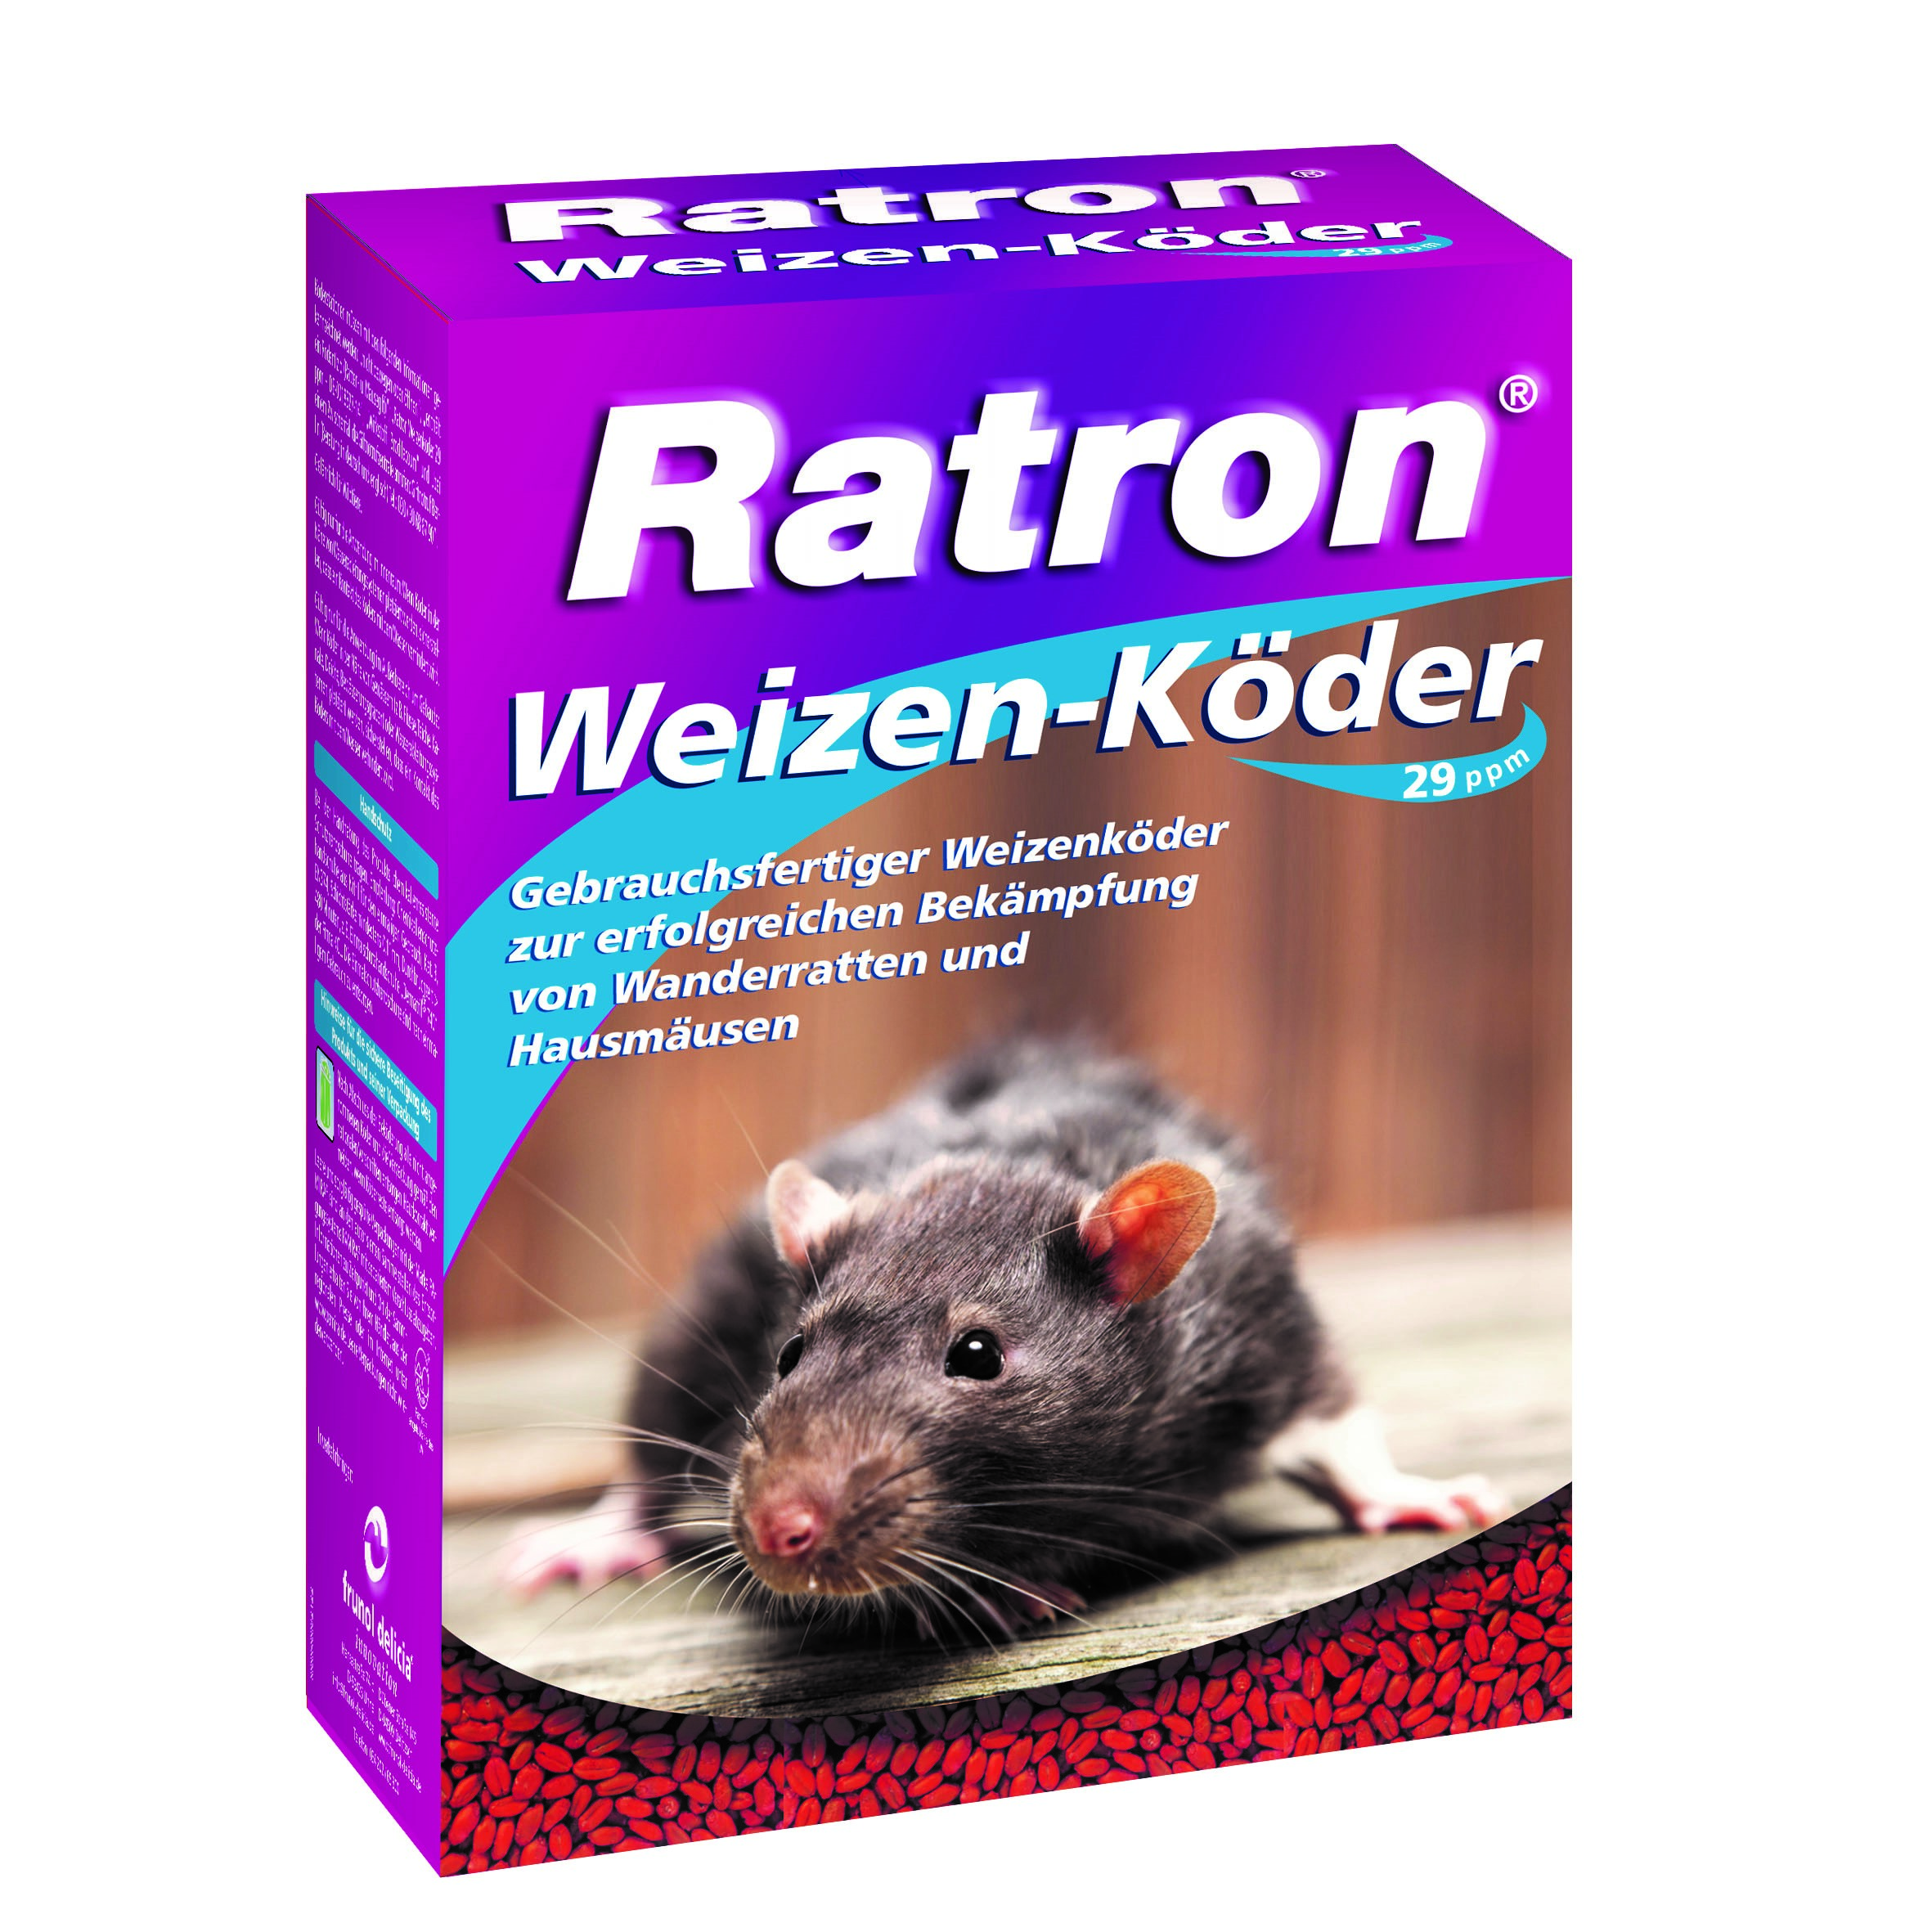 Ratron® Weizen-Köder 29 ppm Ratten- und Mäusebekämpfung 400 g